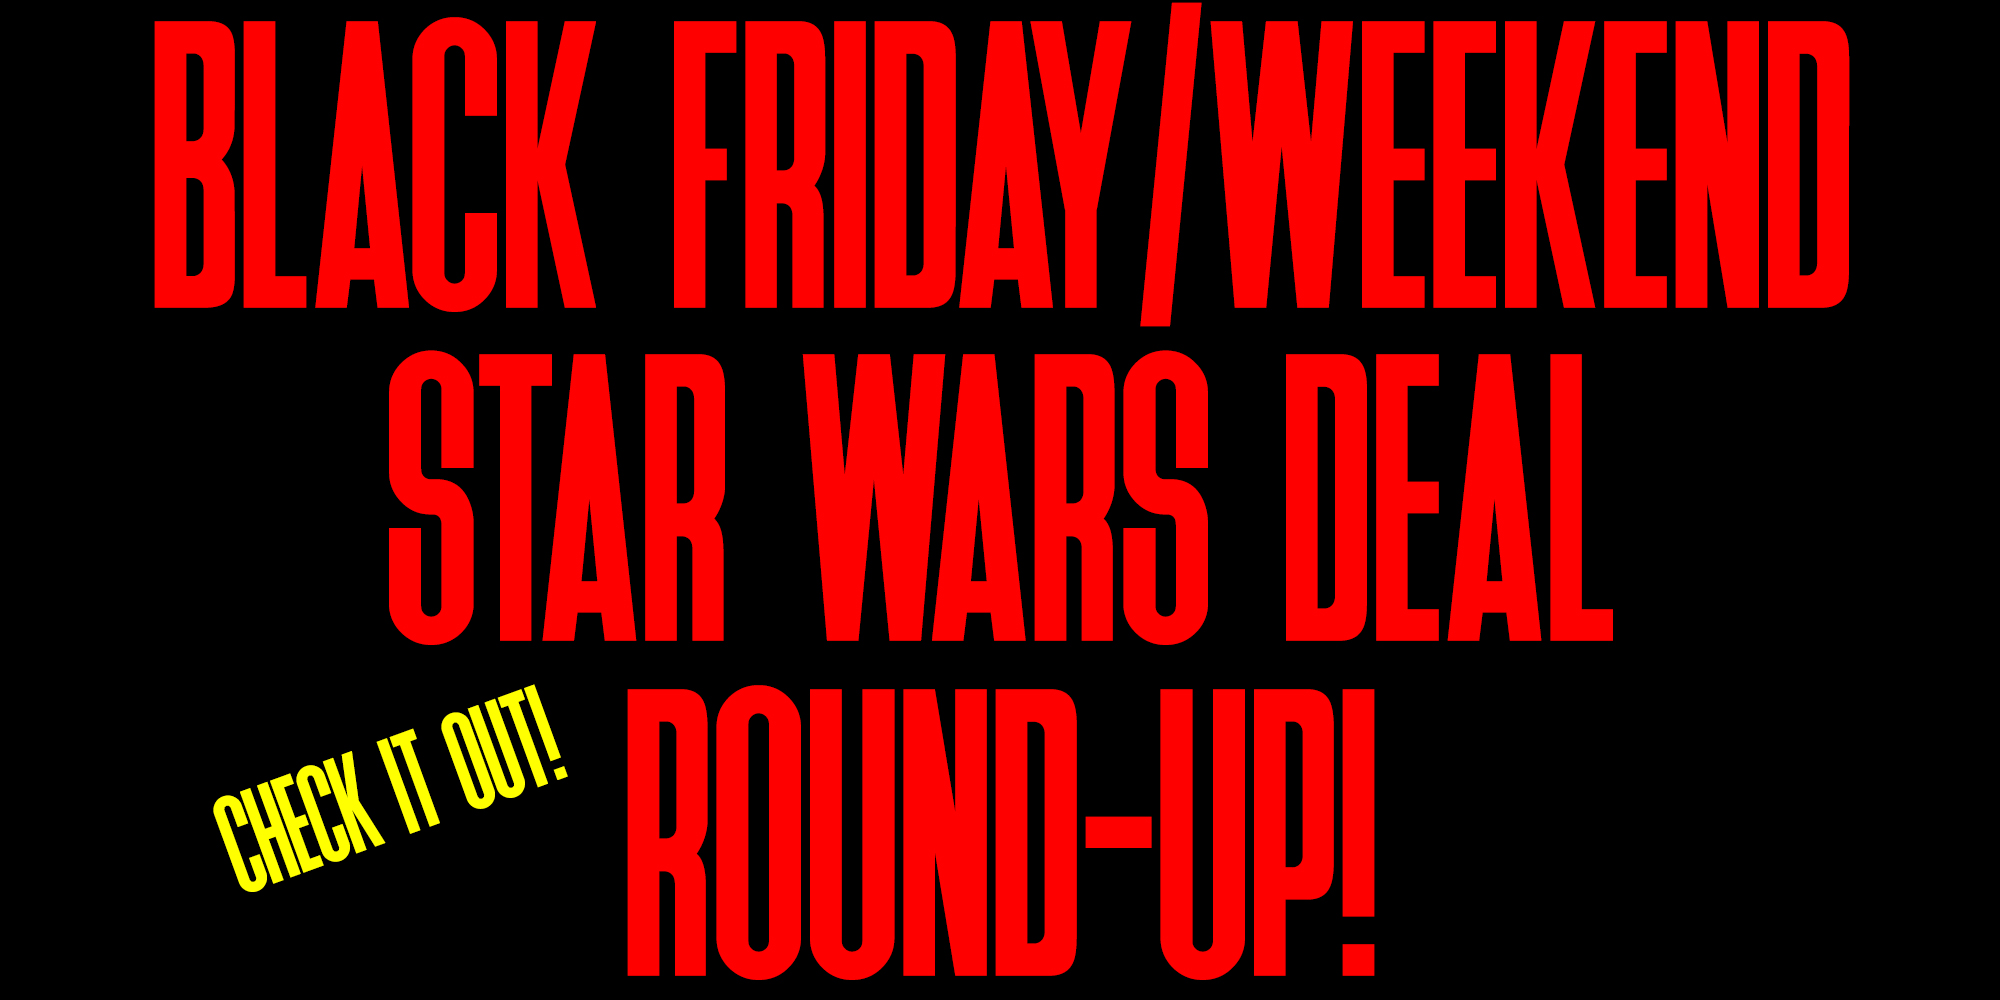 Black Friday 2021 Star Wars Deals